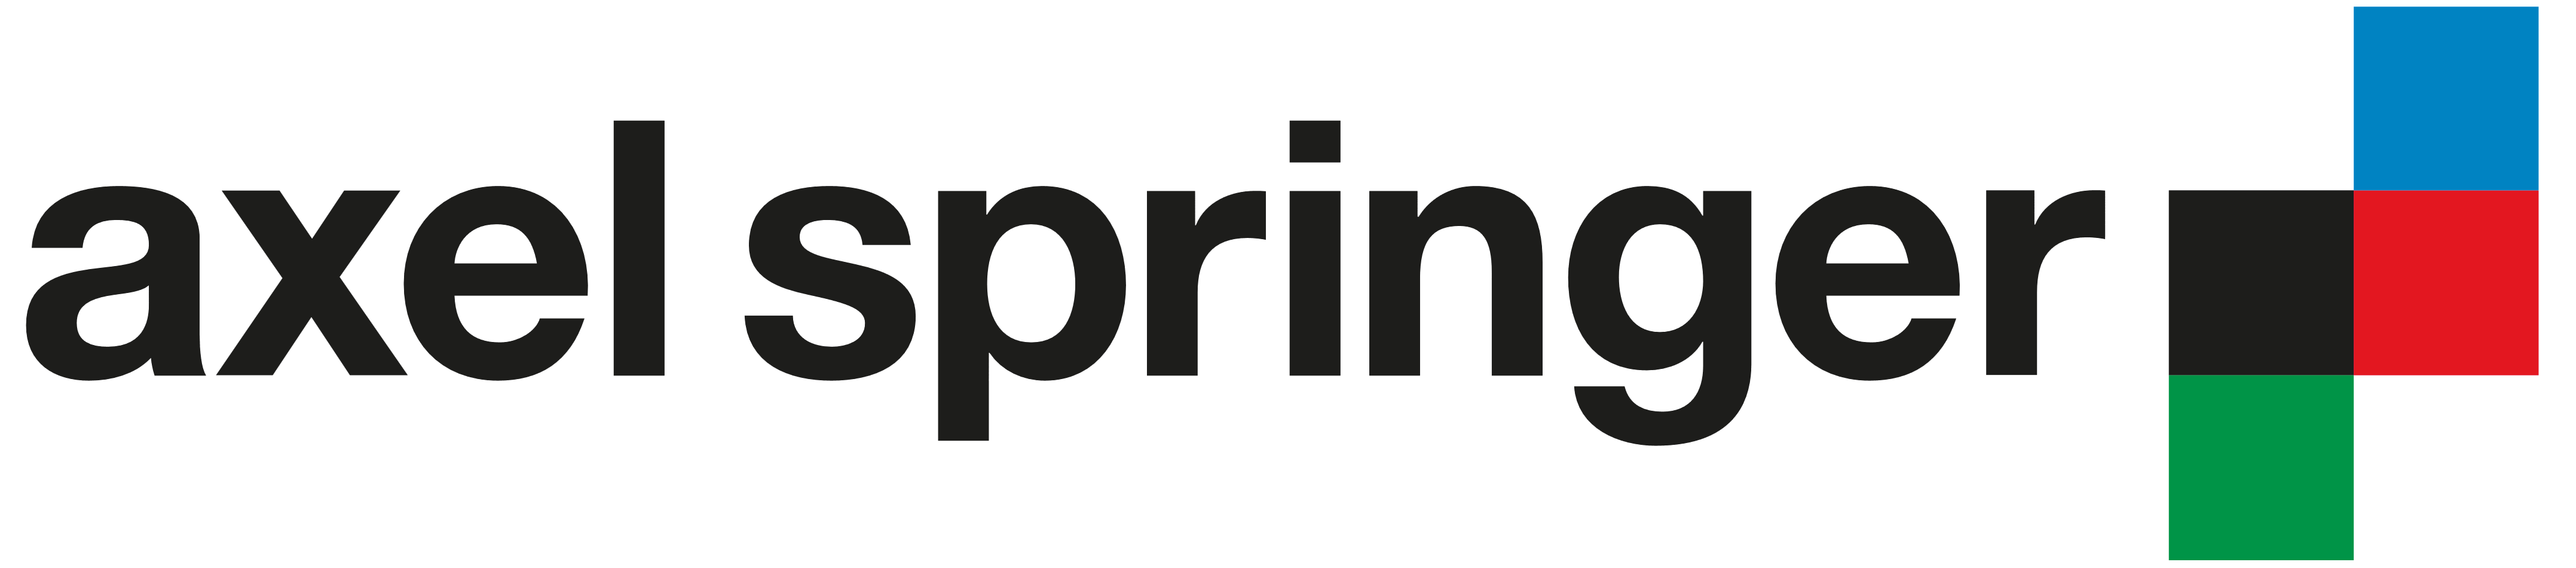 Axel Springer logo, logotype